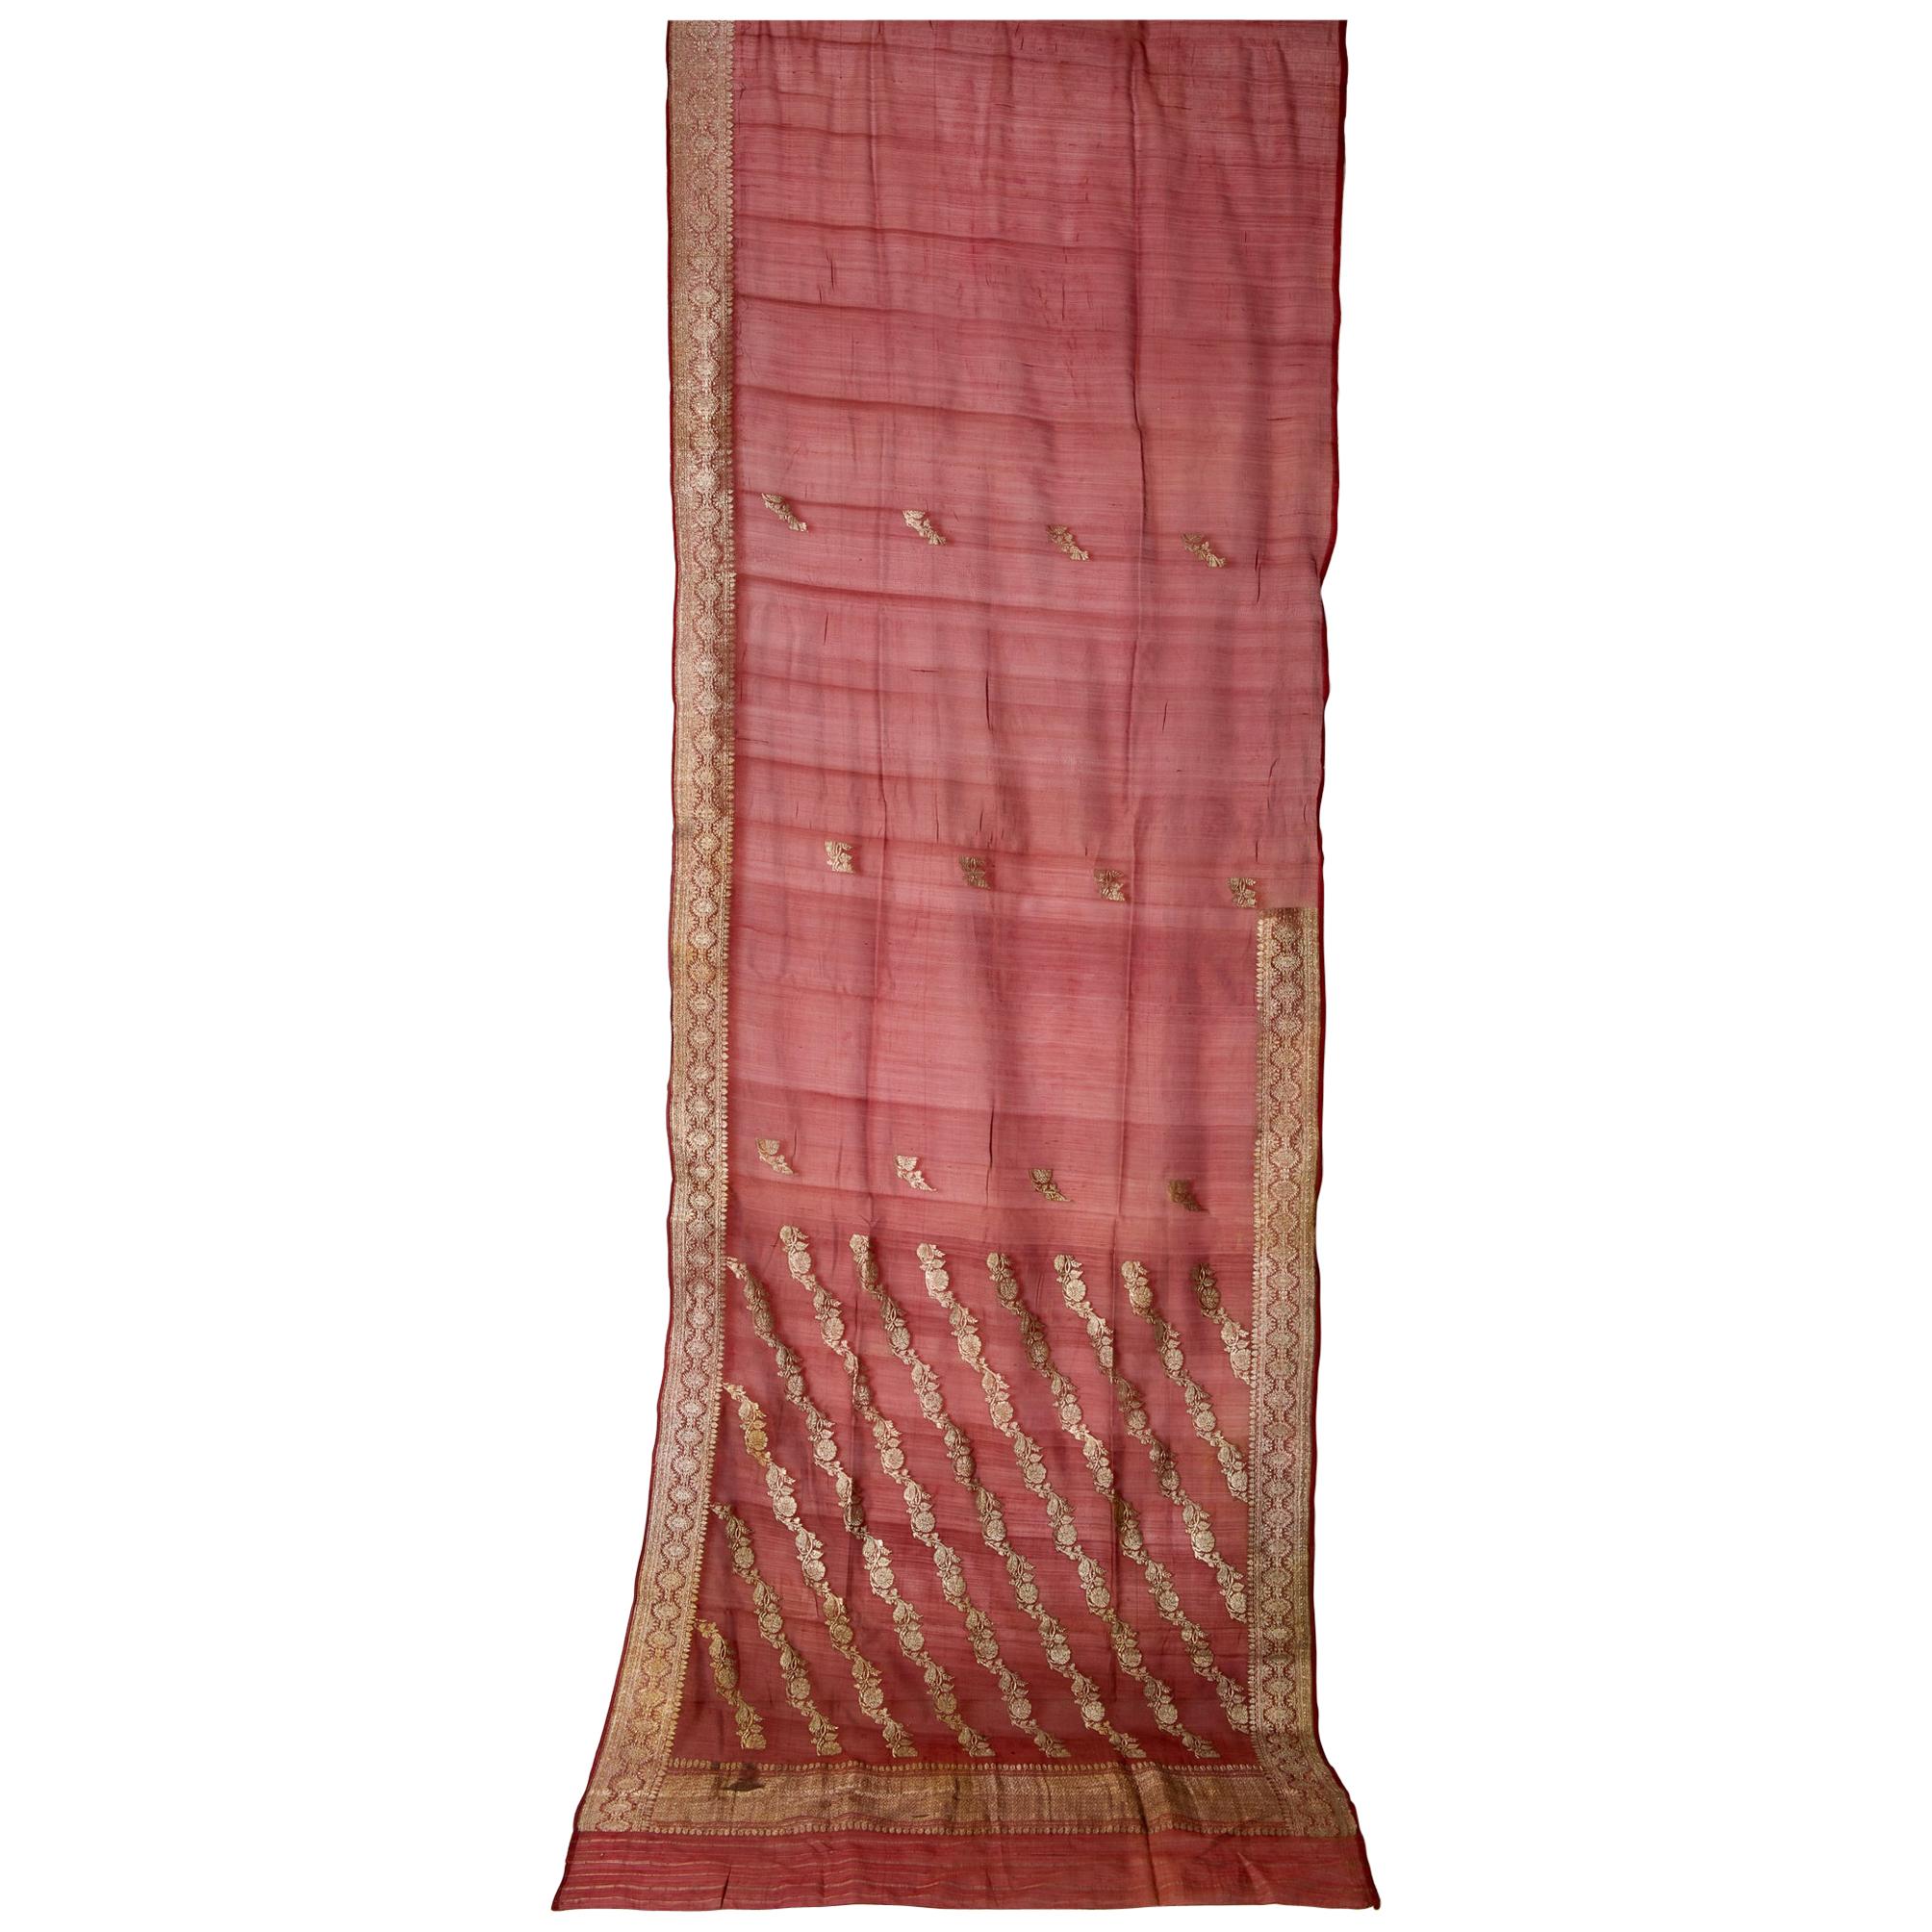 Vintage Indian Sari Mauve Color for Curtains or Evening Dress